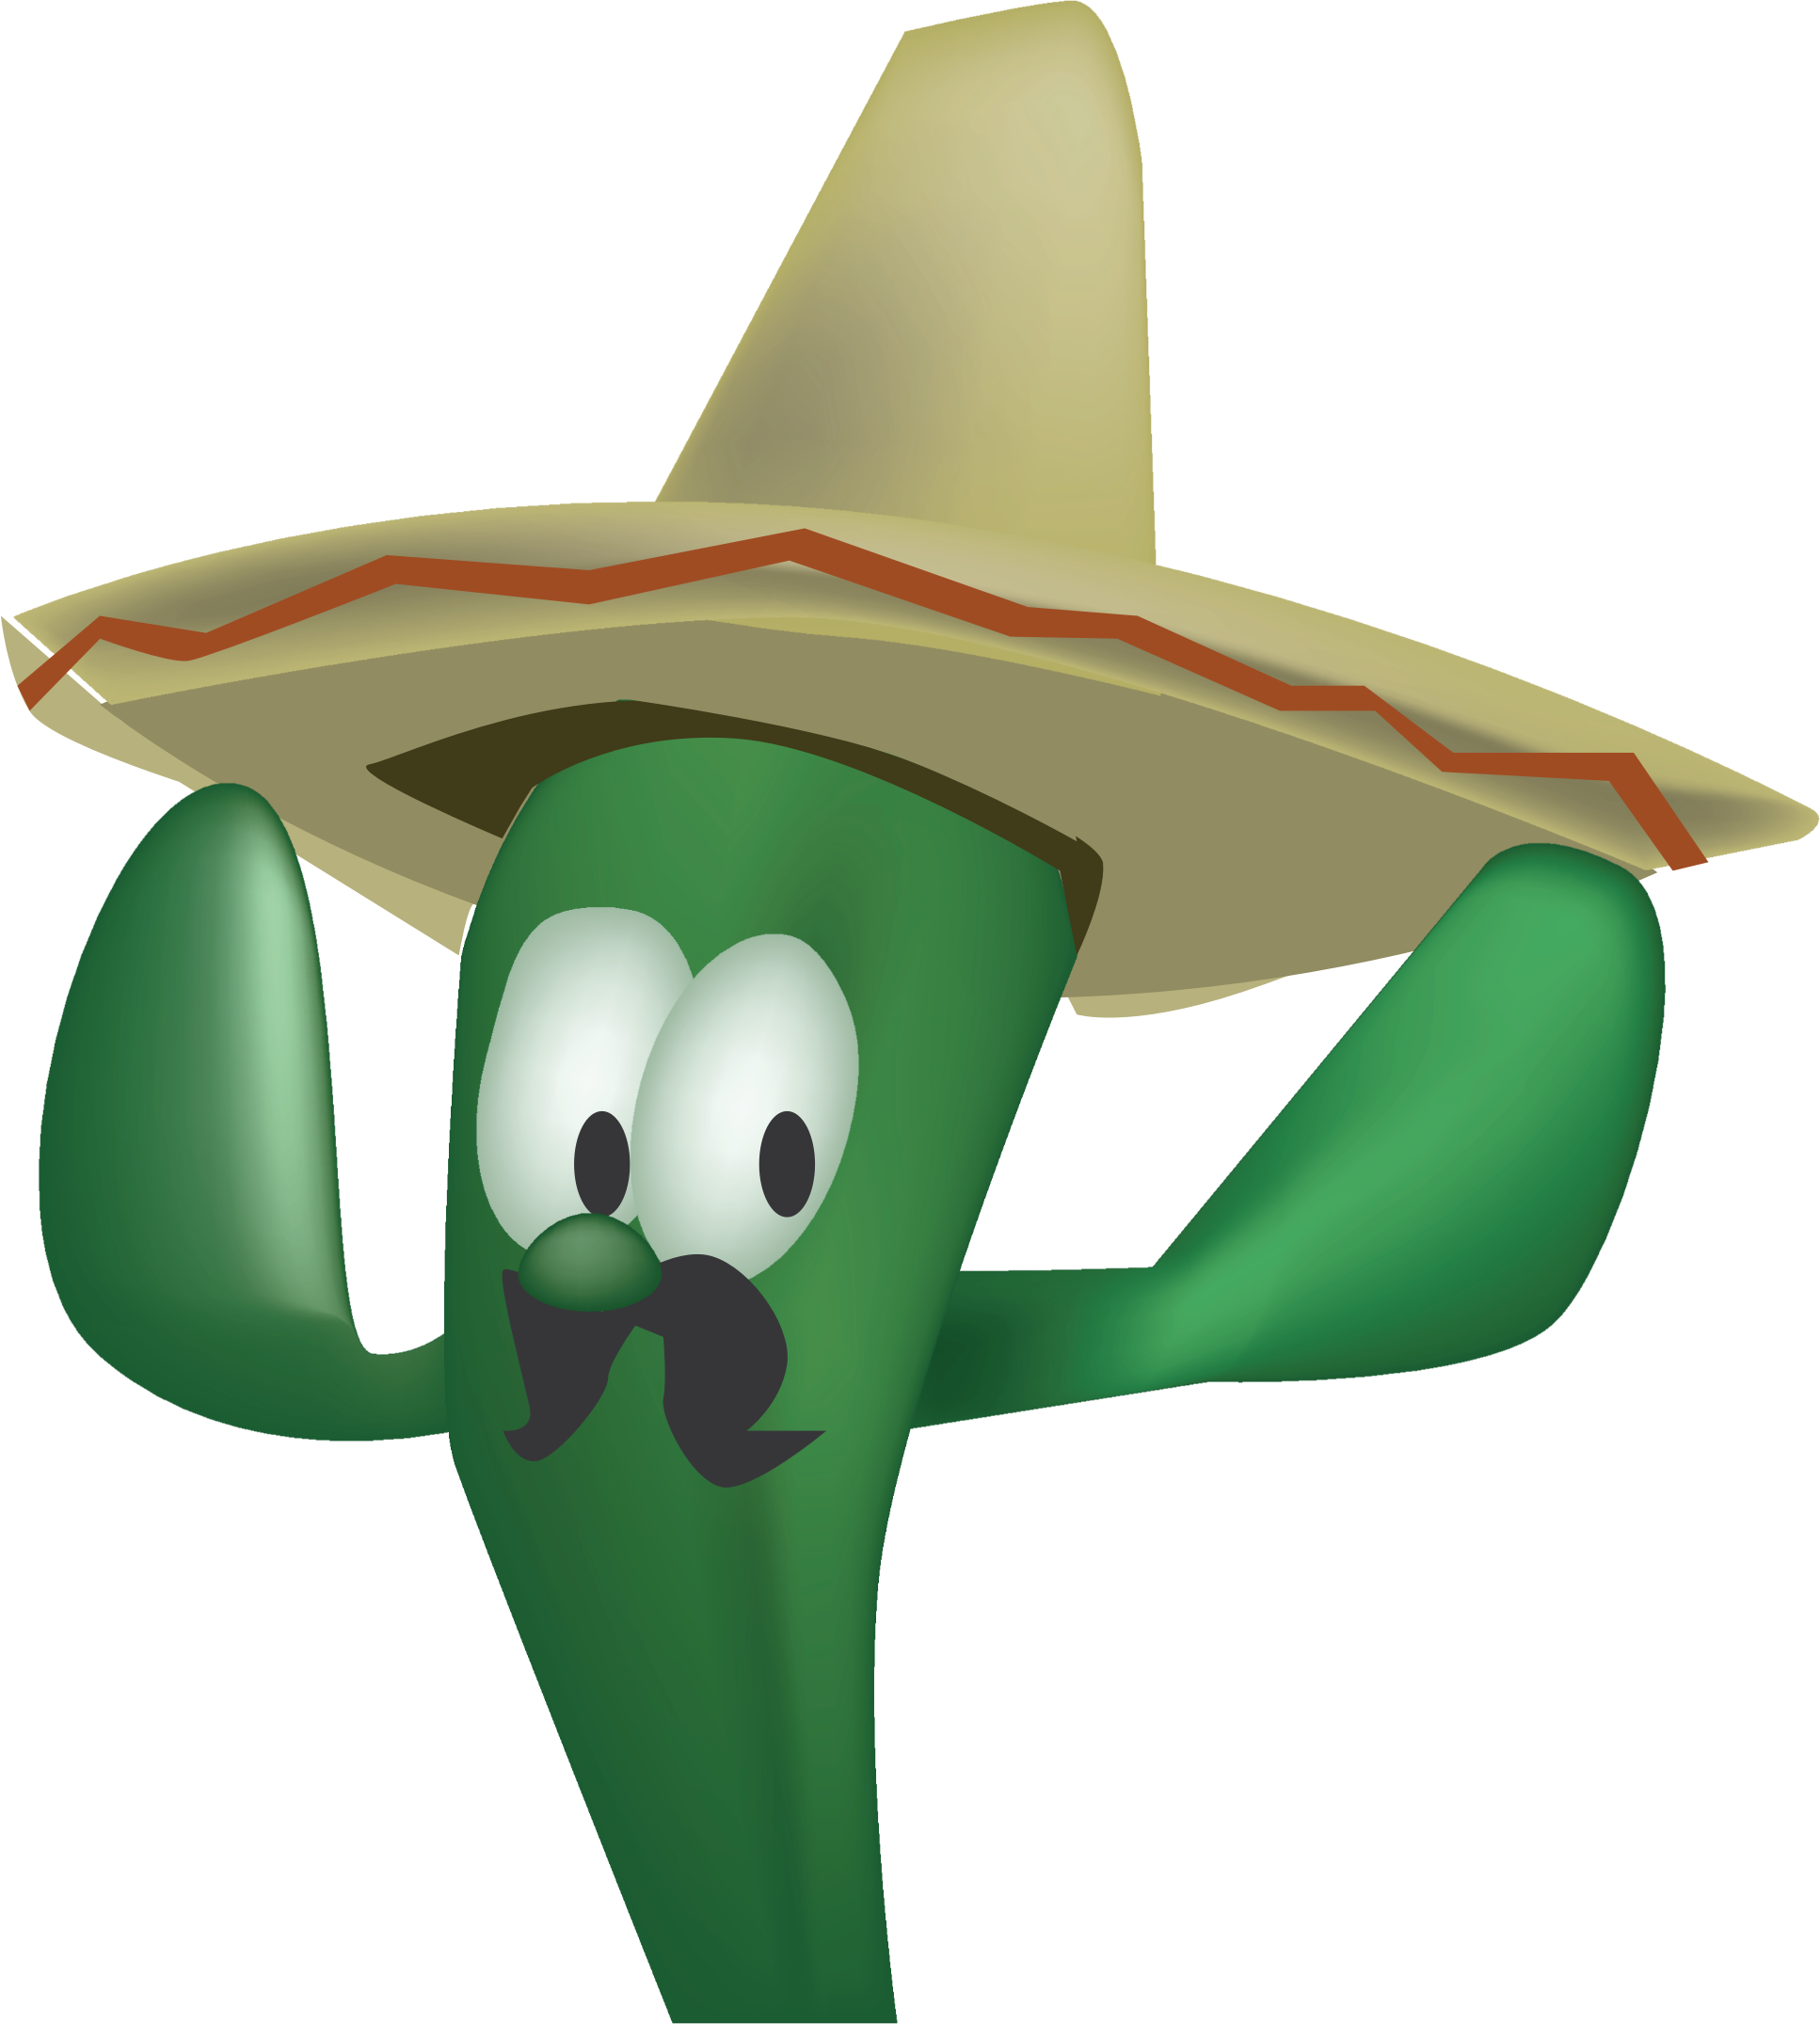 Sombrero big image png. Mexican clipart cactus